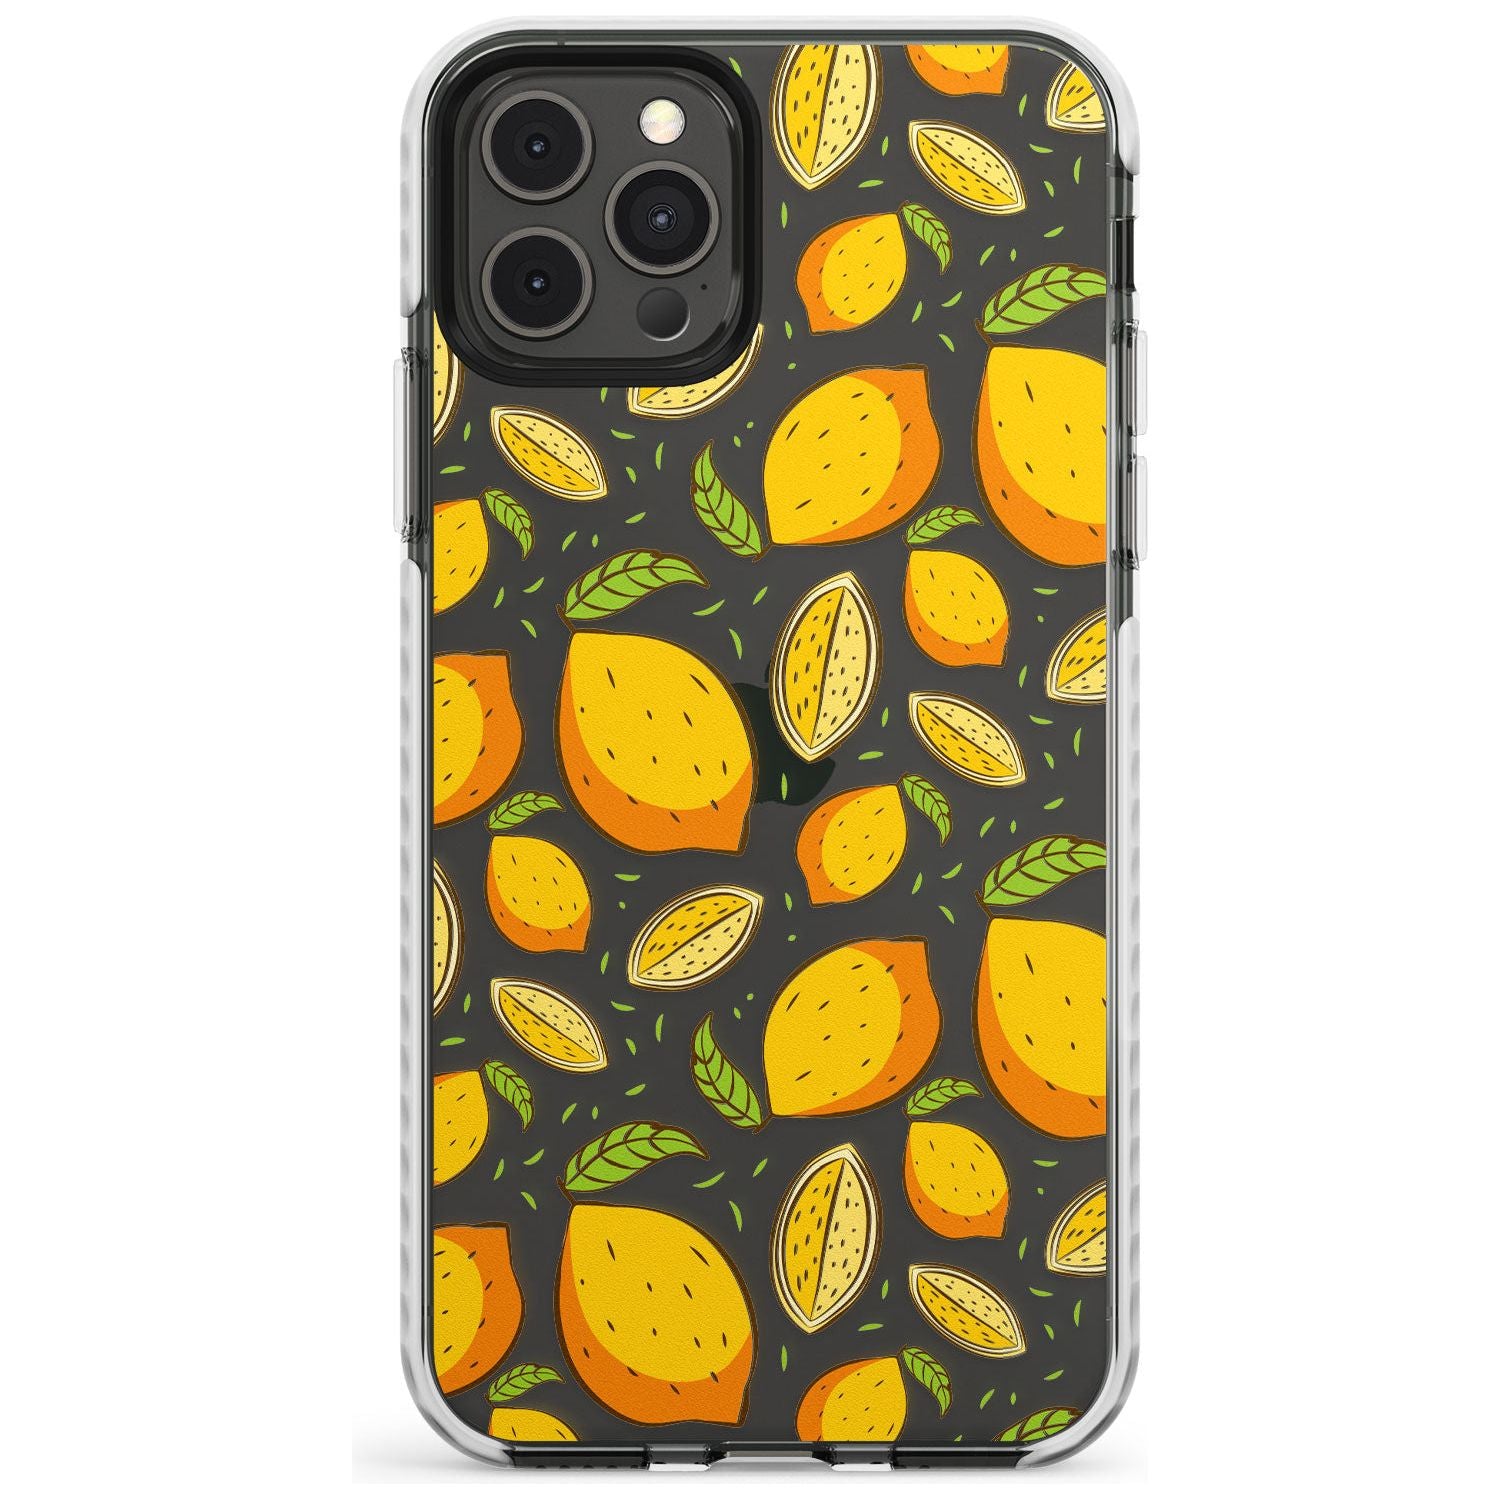 Lemon Pattern Impact Phone Case for iPhone 11 Pro Max